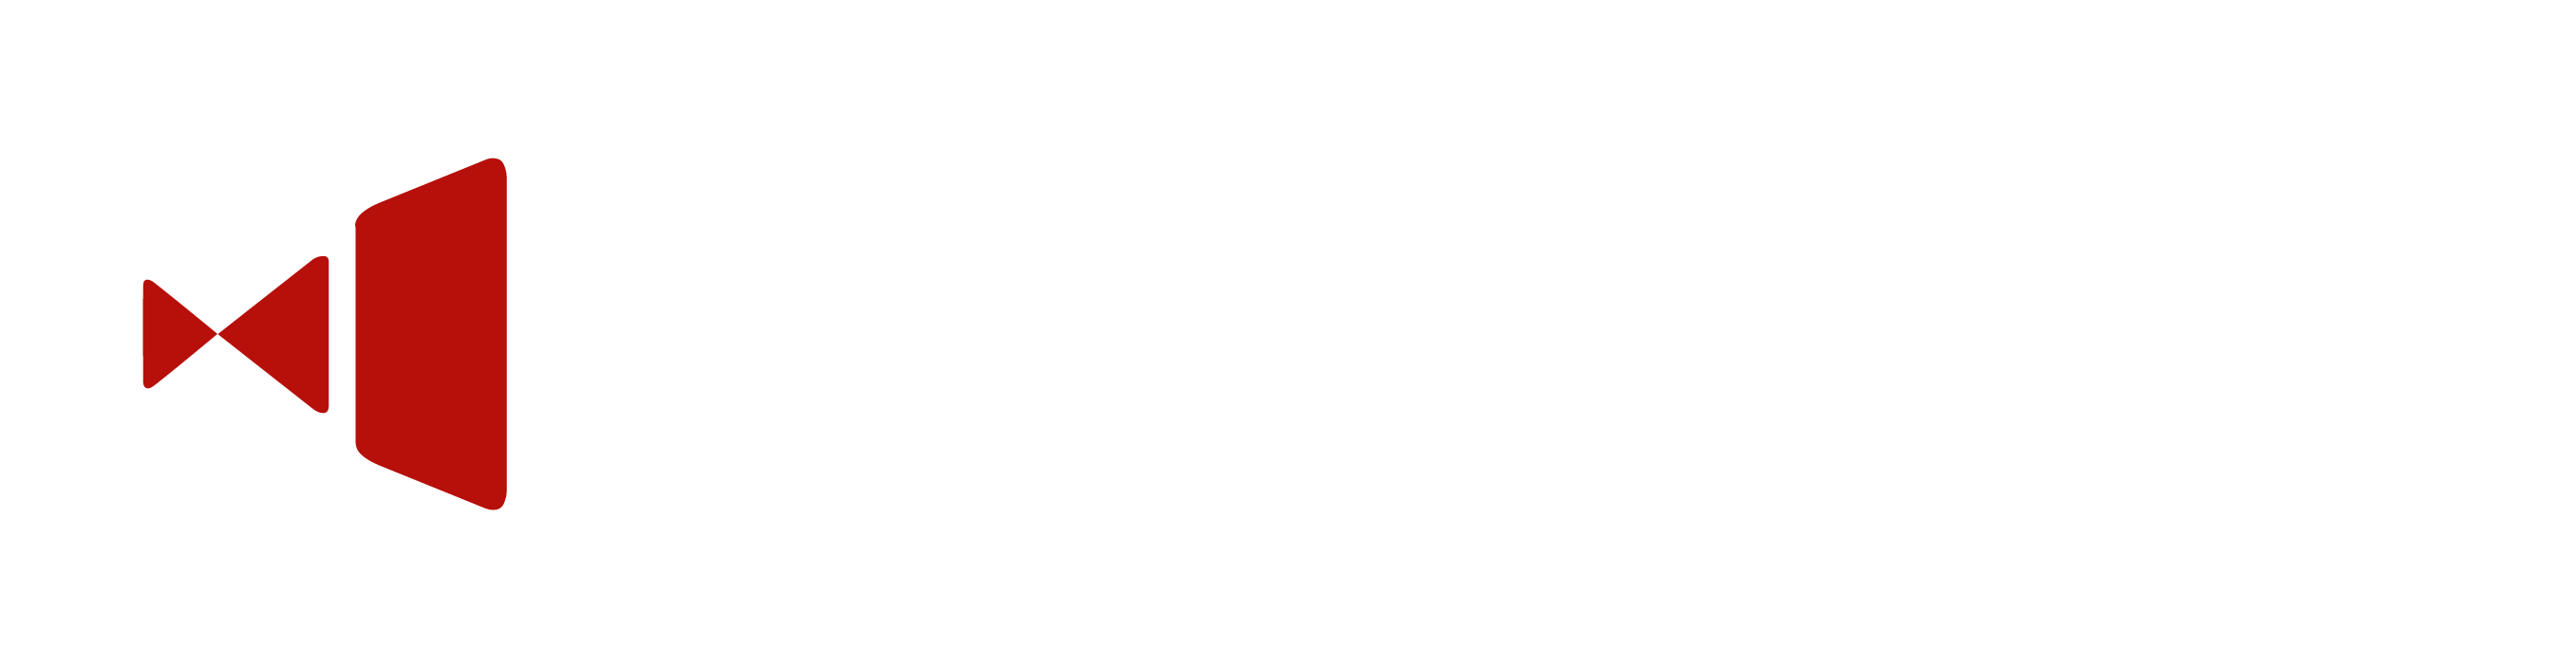 Octosignals